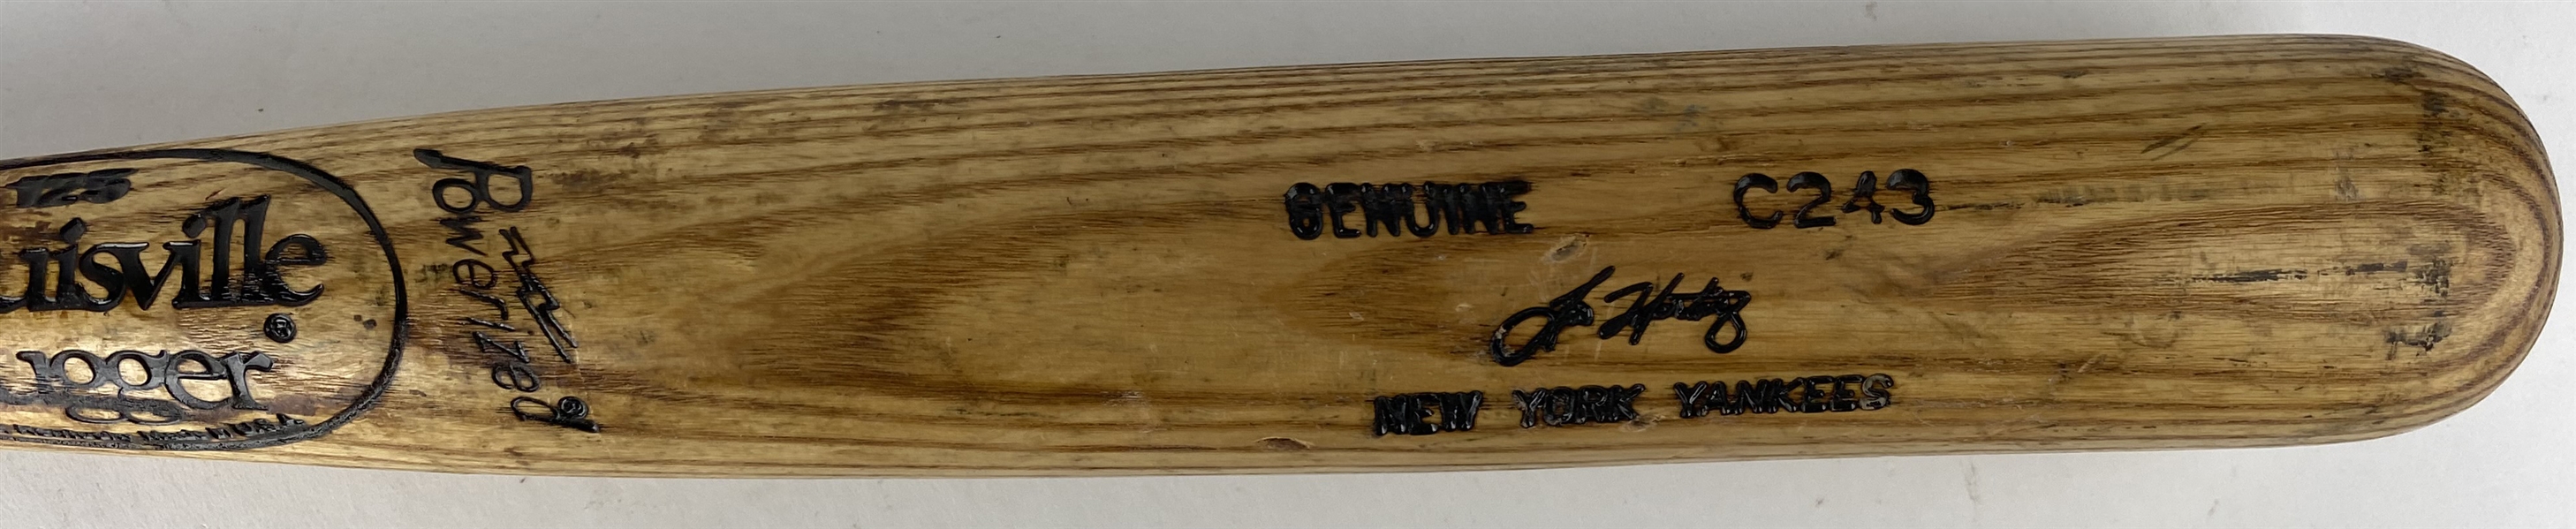 Tino Martinez Game Used 1995-1997 C243 Baseball Bat - PSA/DNA GU 9!